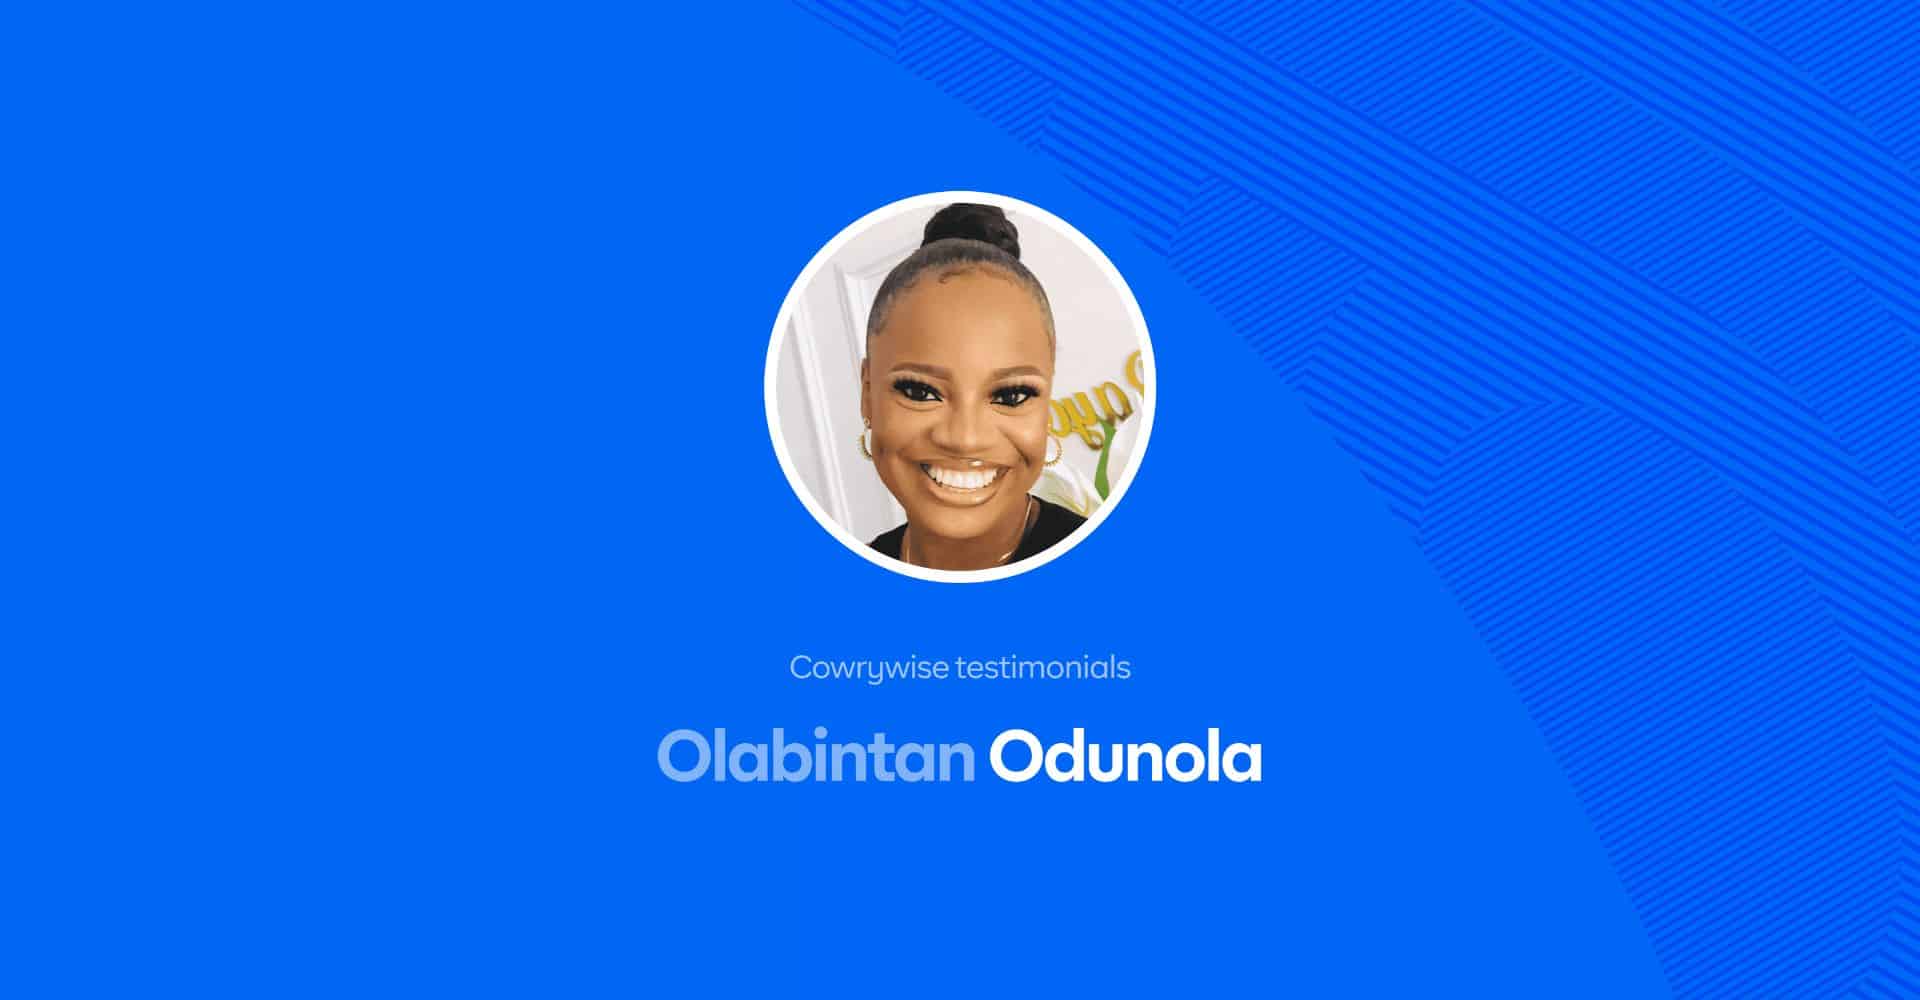 Olabintan-Odunola testimonial article image